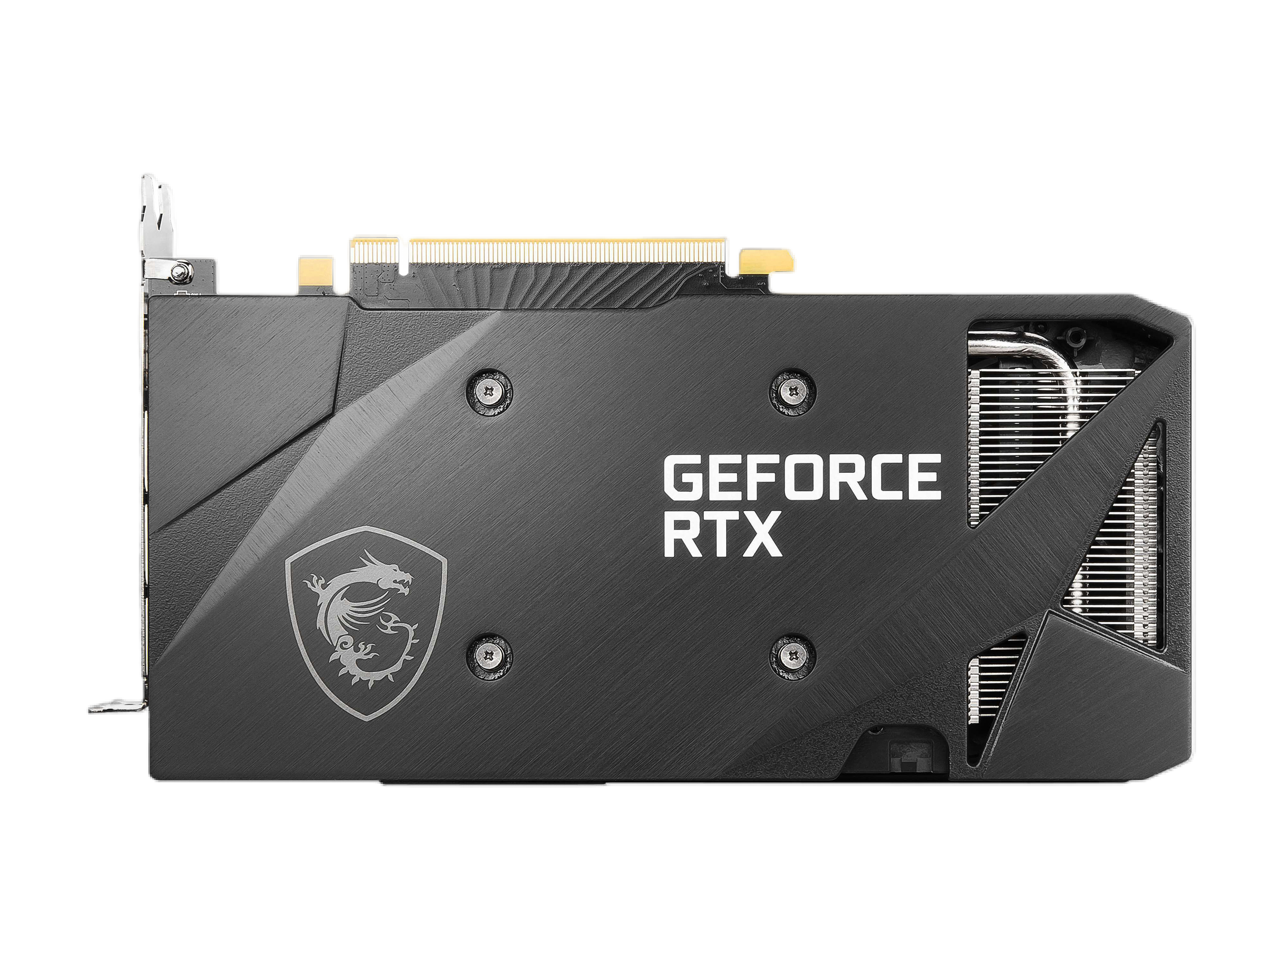 MSI Ventus GeForce RTX 3050 8GB GDDR6 PCI Express 4.0 Video Card RTX 3050 Ventus 2X 8G OC